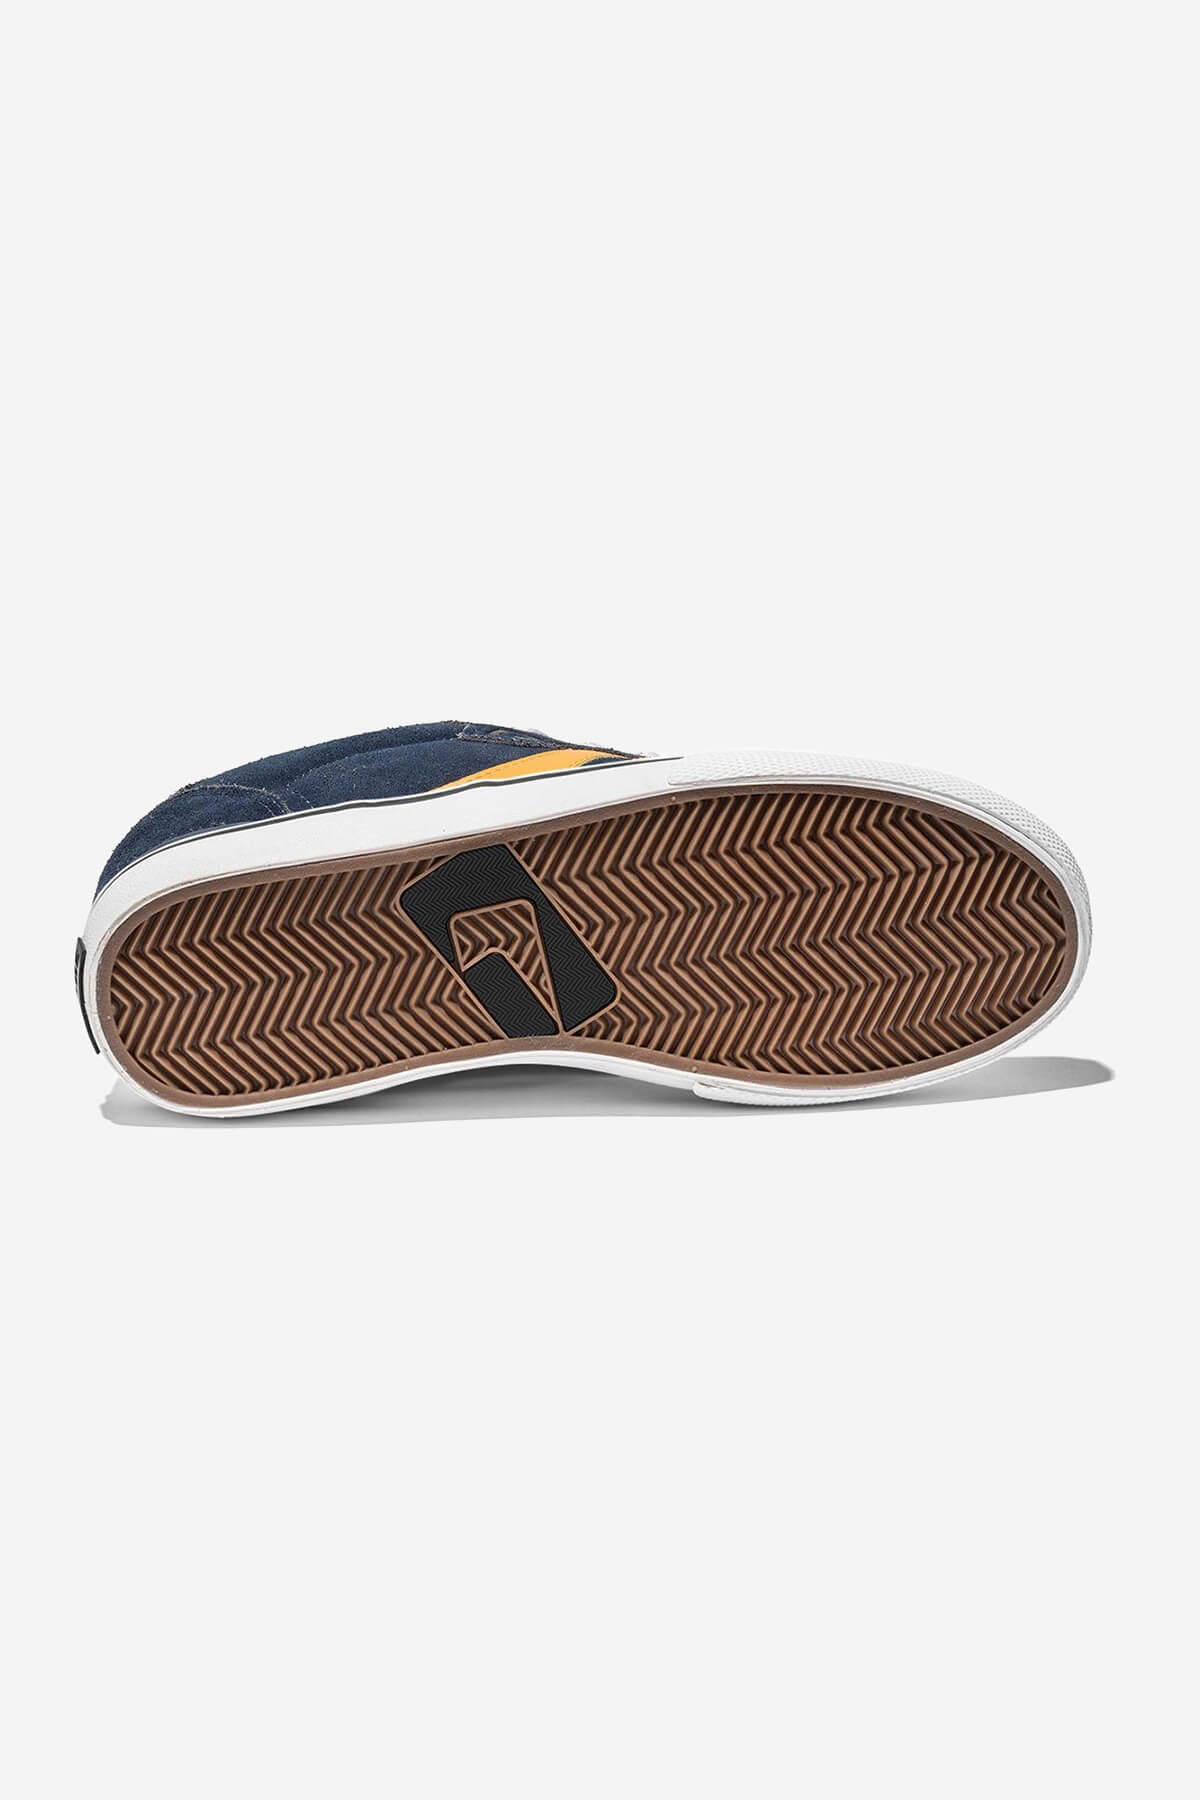 Bis-2 Navy/Yellow skateboard scarpe